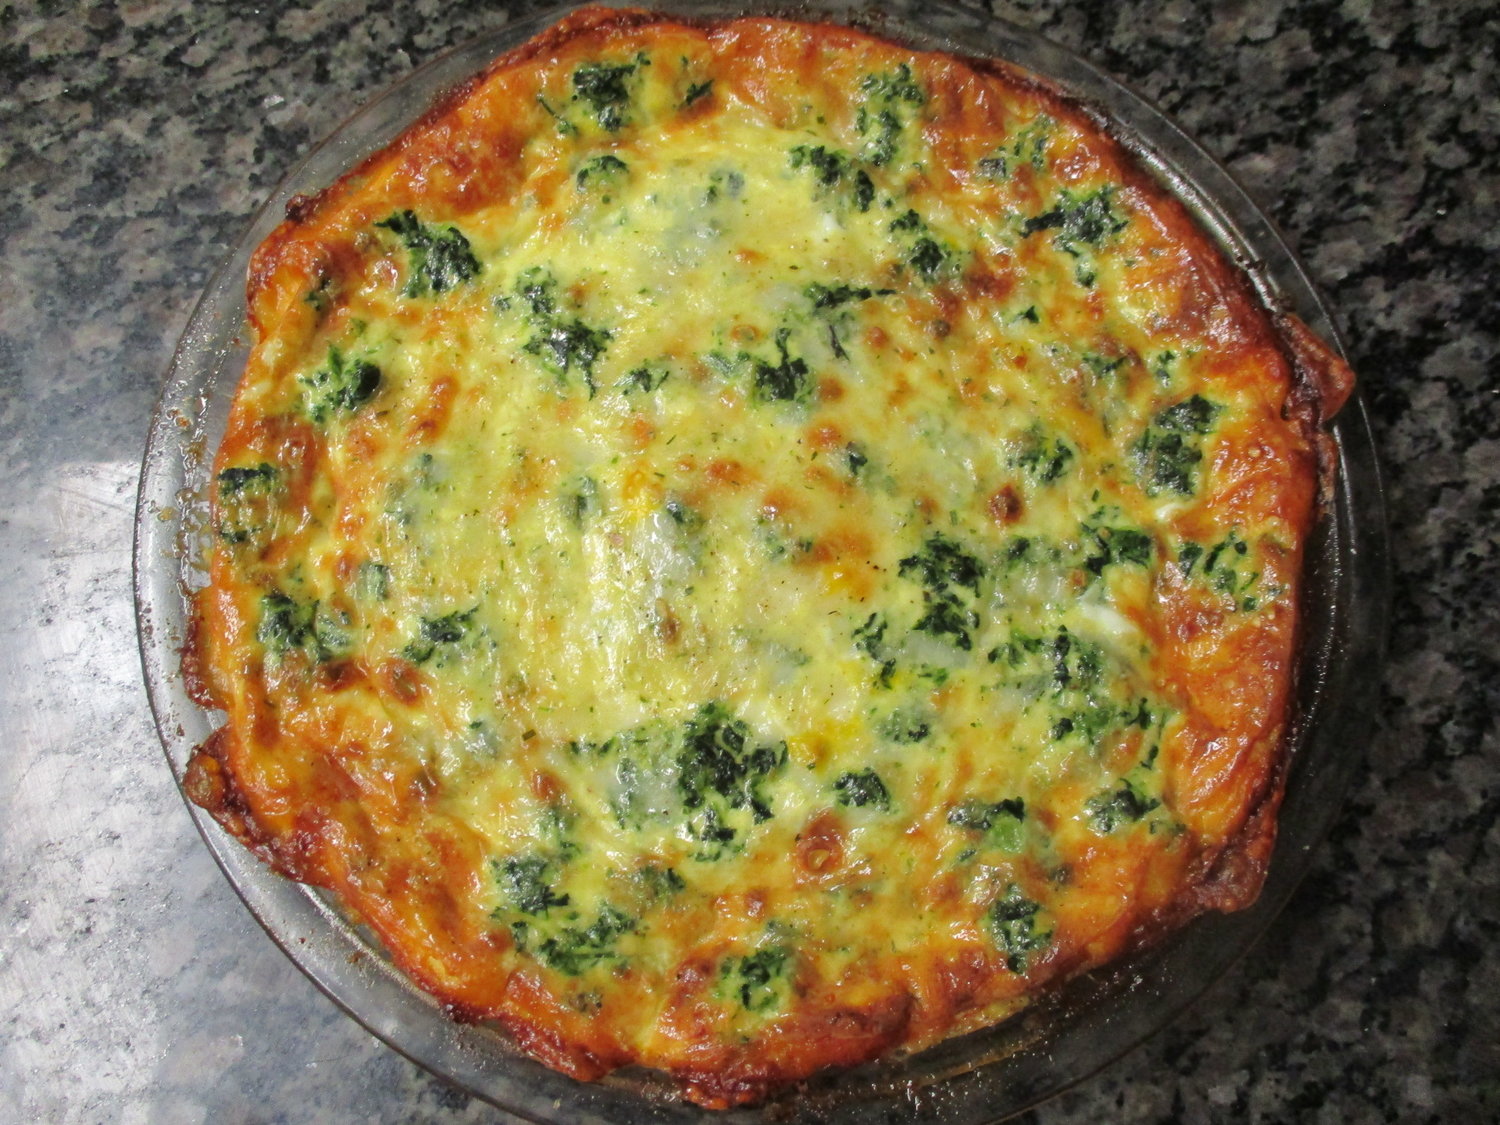 A crustless quiche, made with farm-fresh eggs, cheese, and kale.